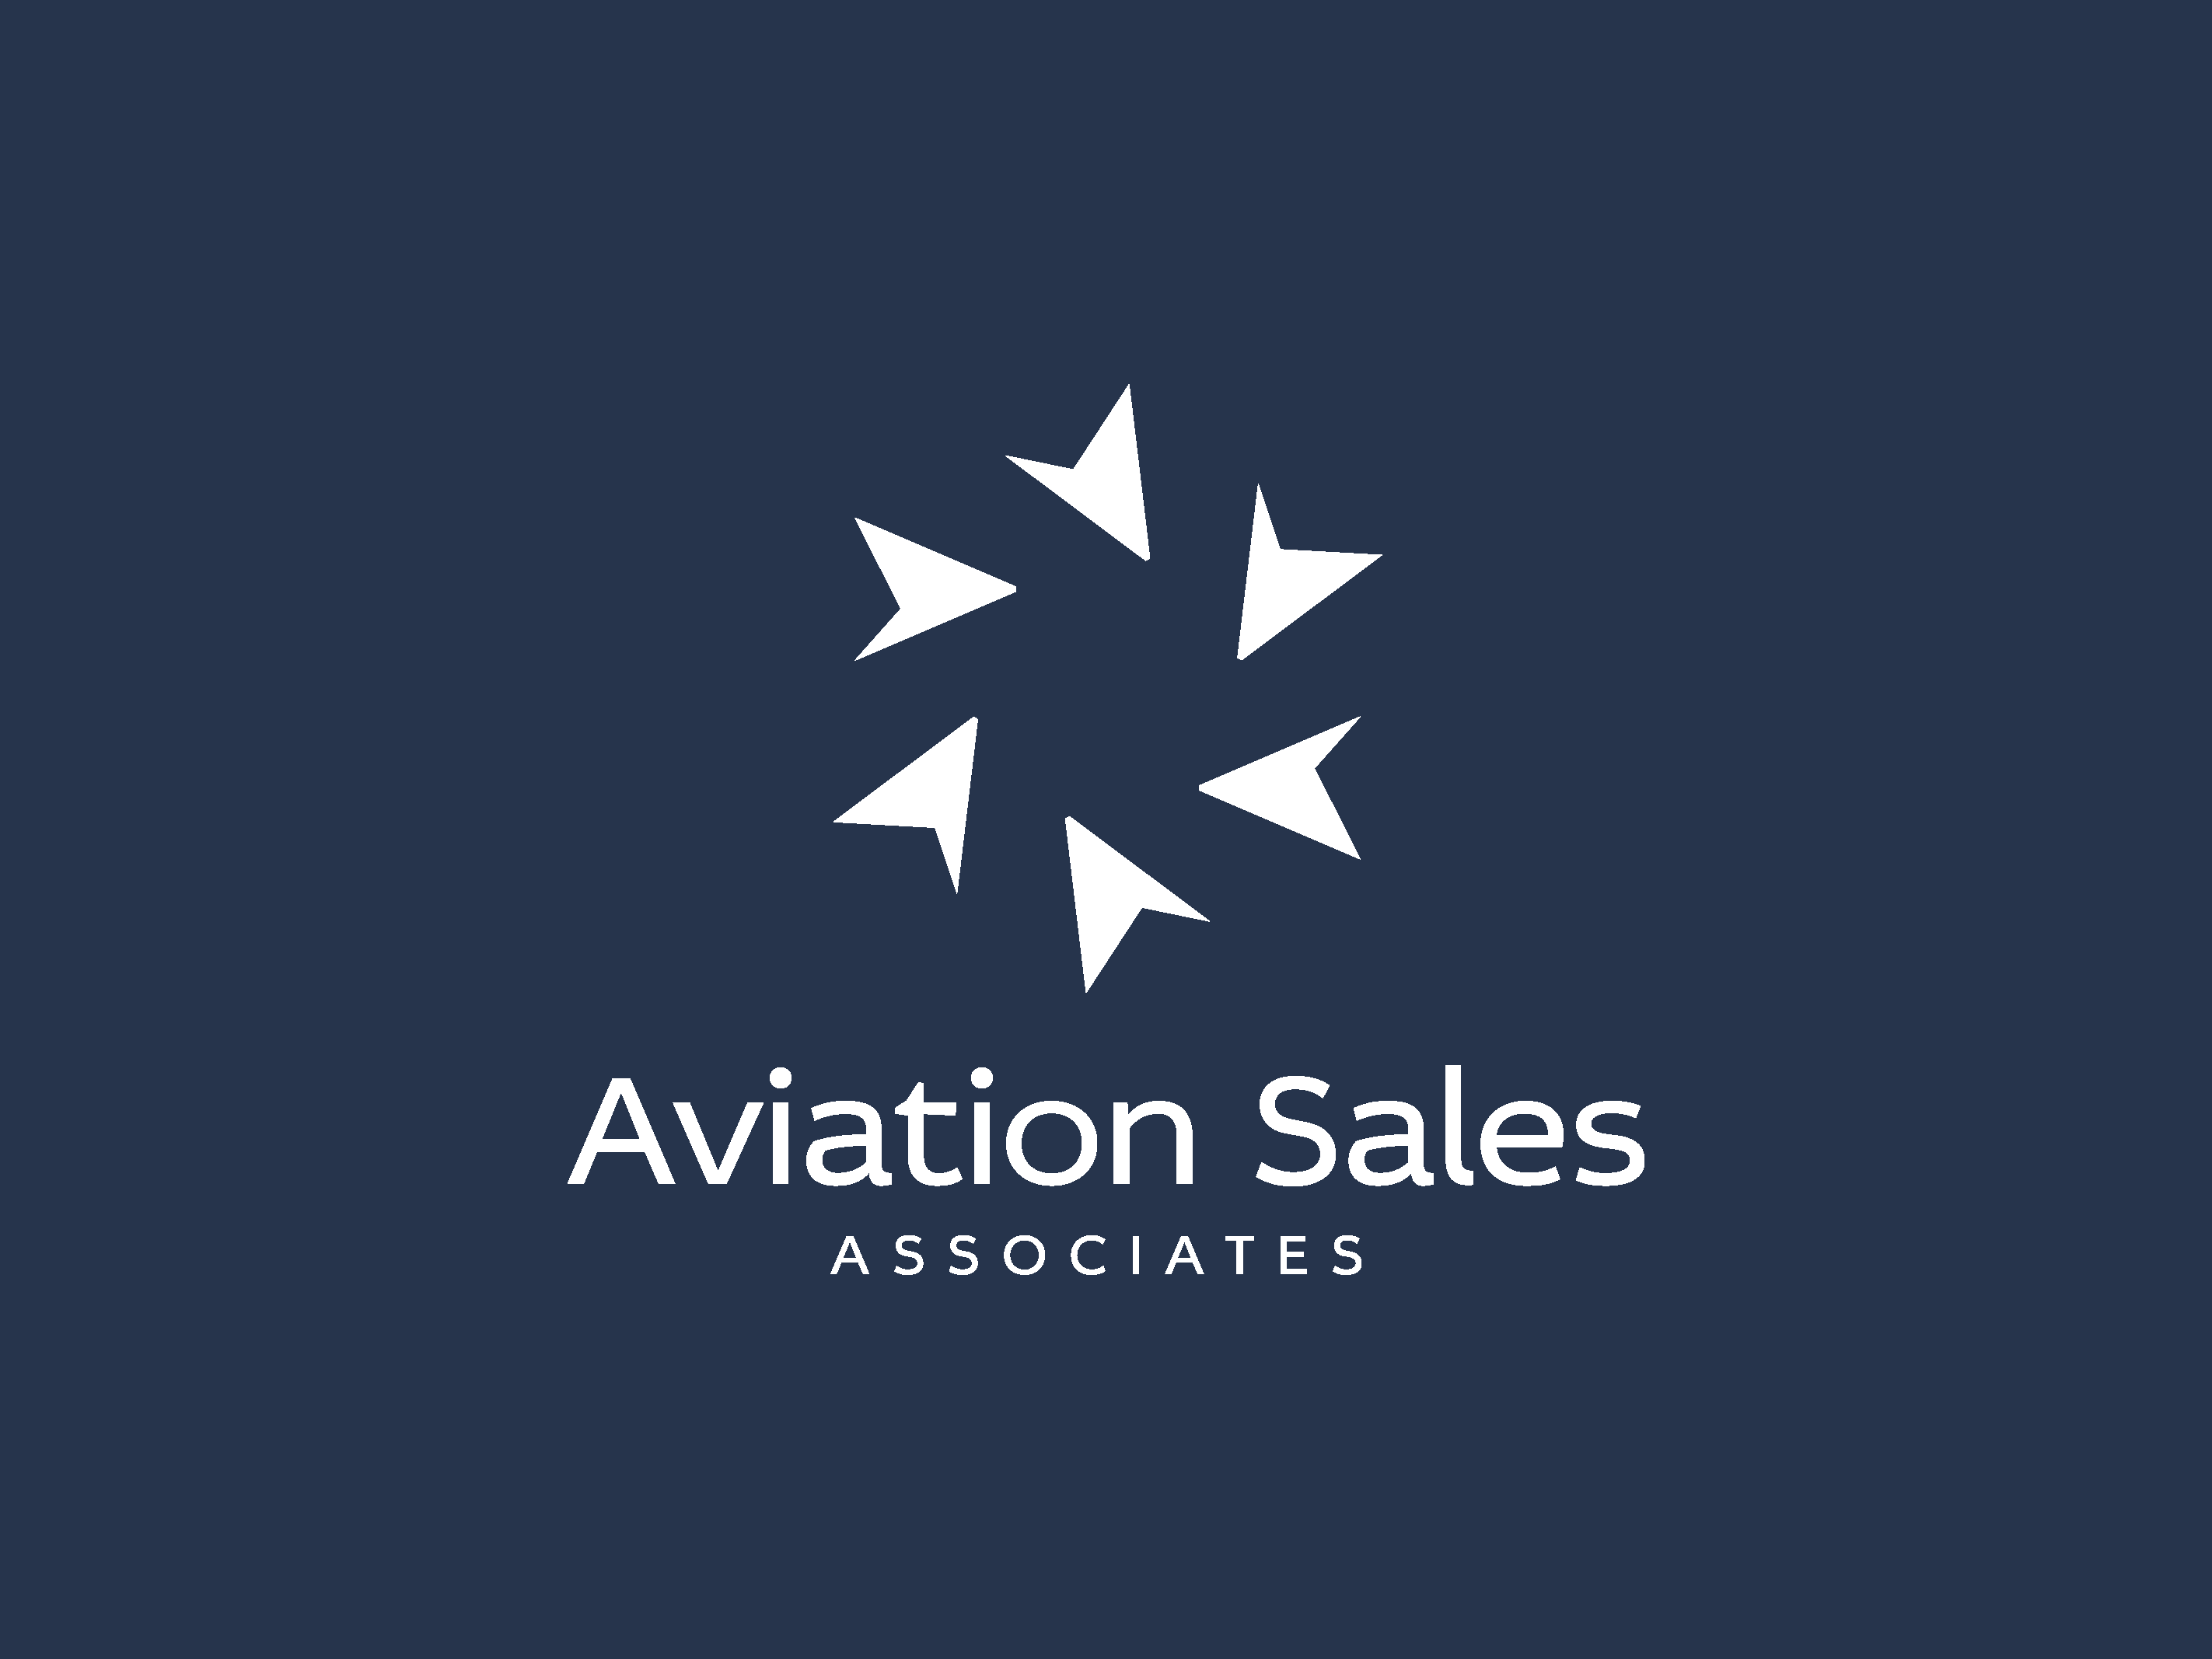 Aviation Sales Associates logo